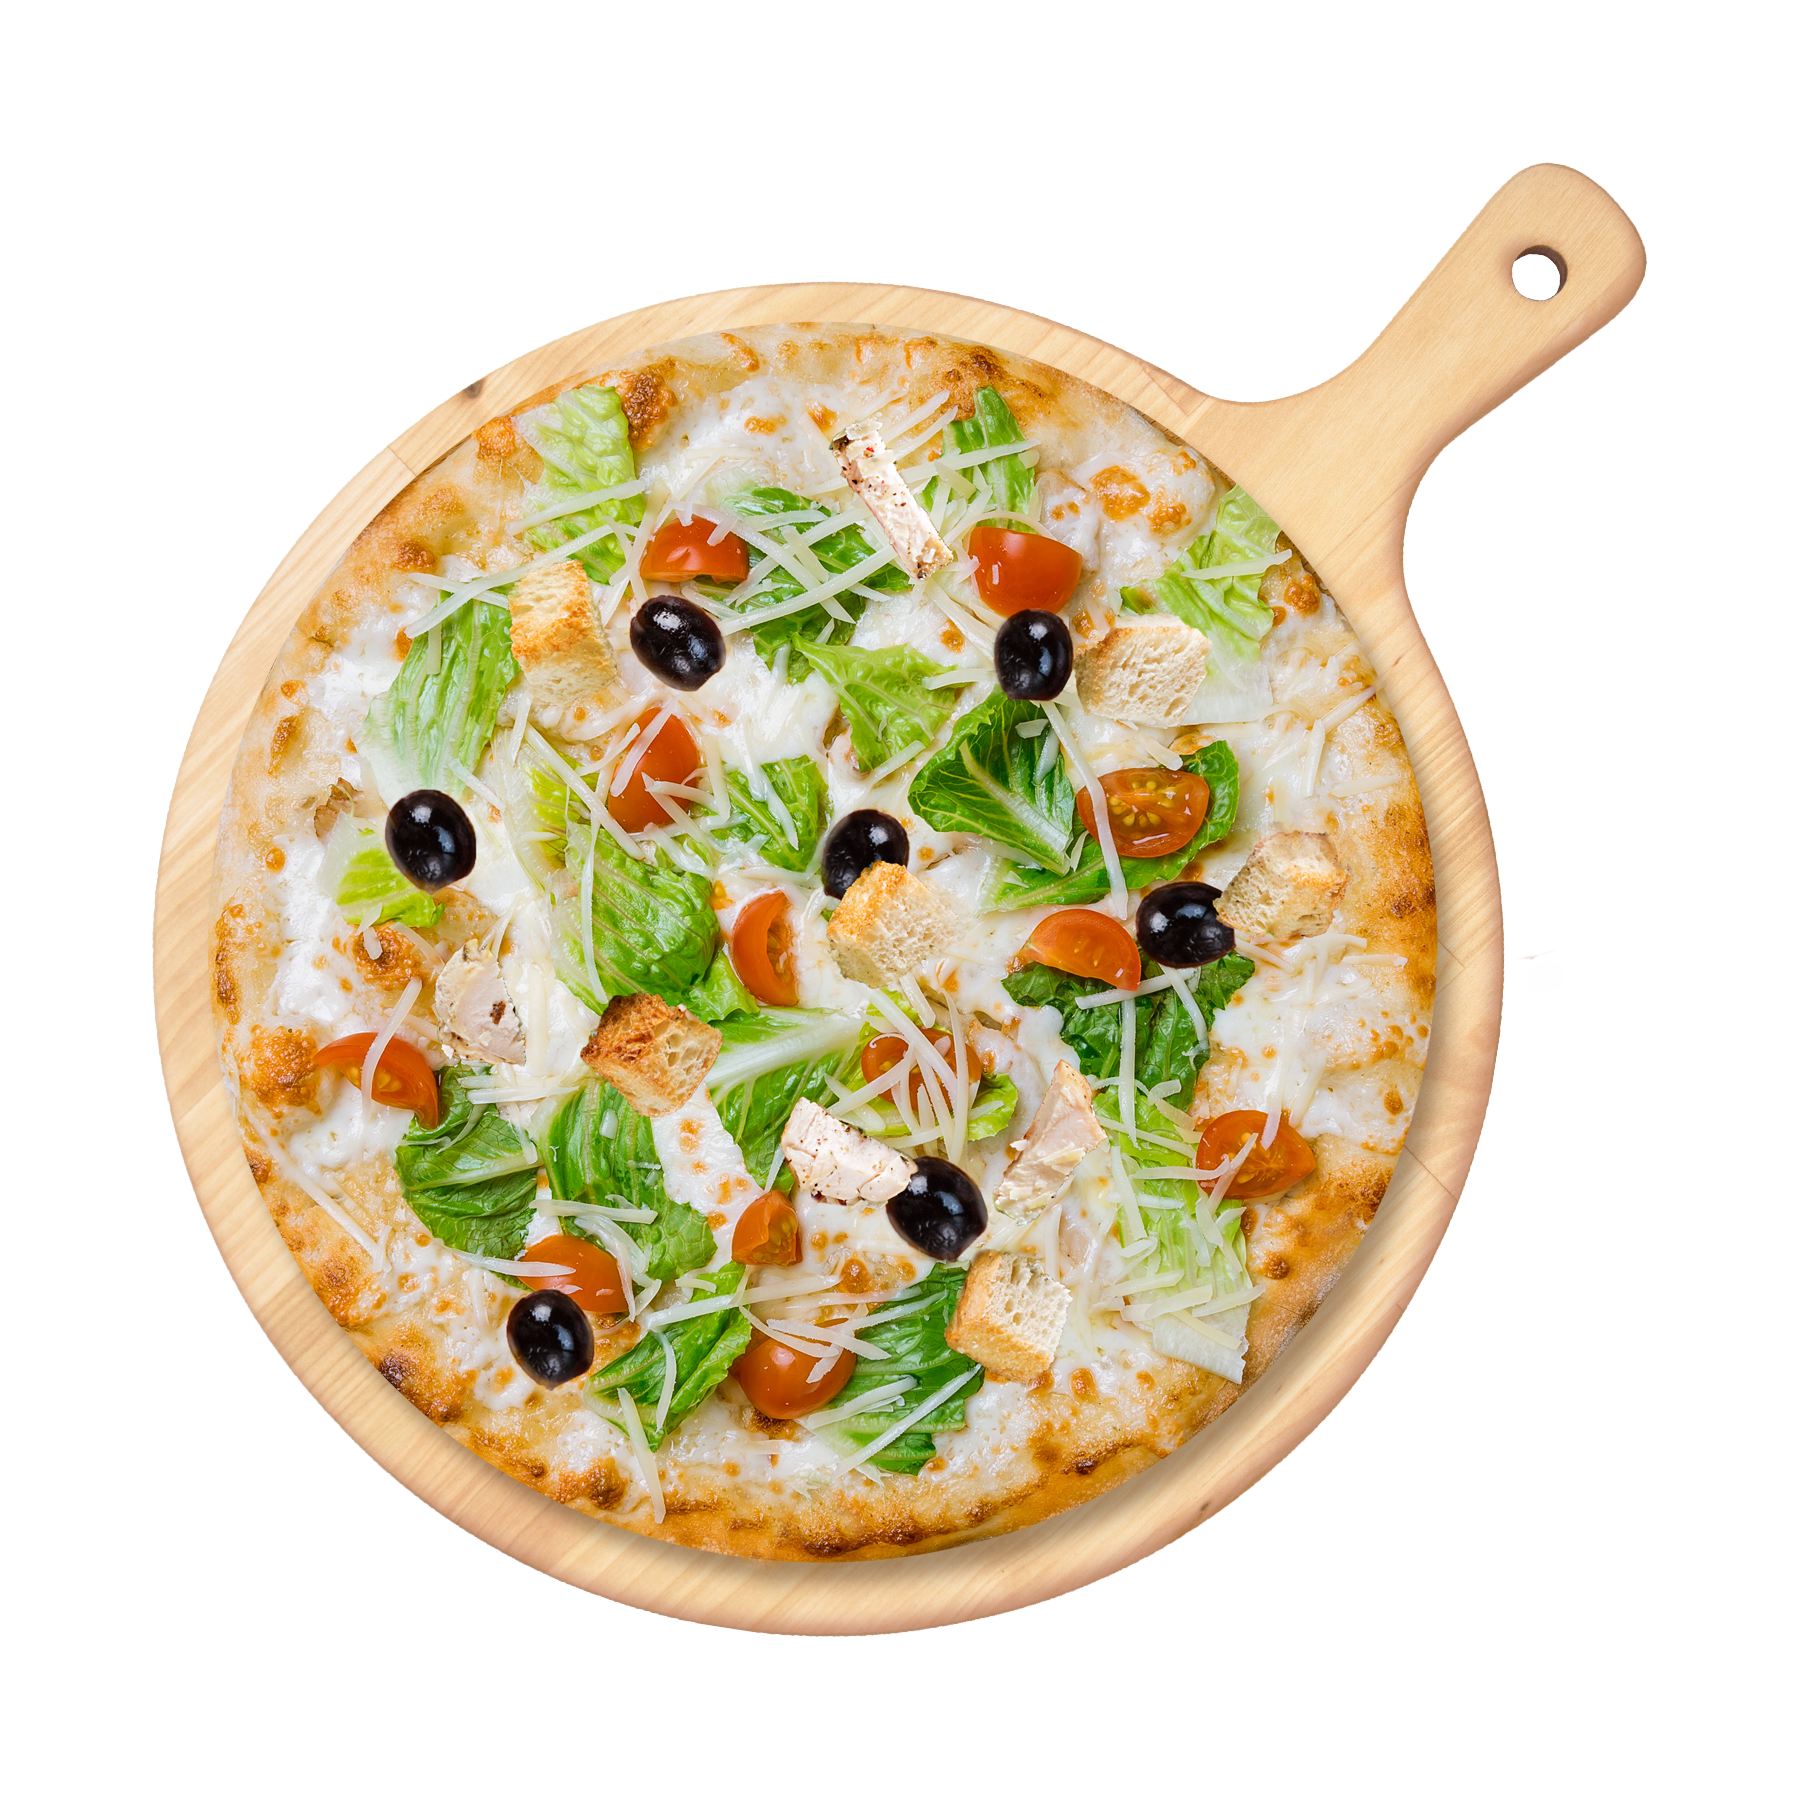 пицца четыре сезона рецепт с фото пошагово фото 68